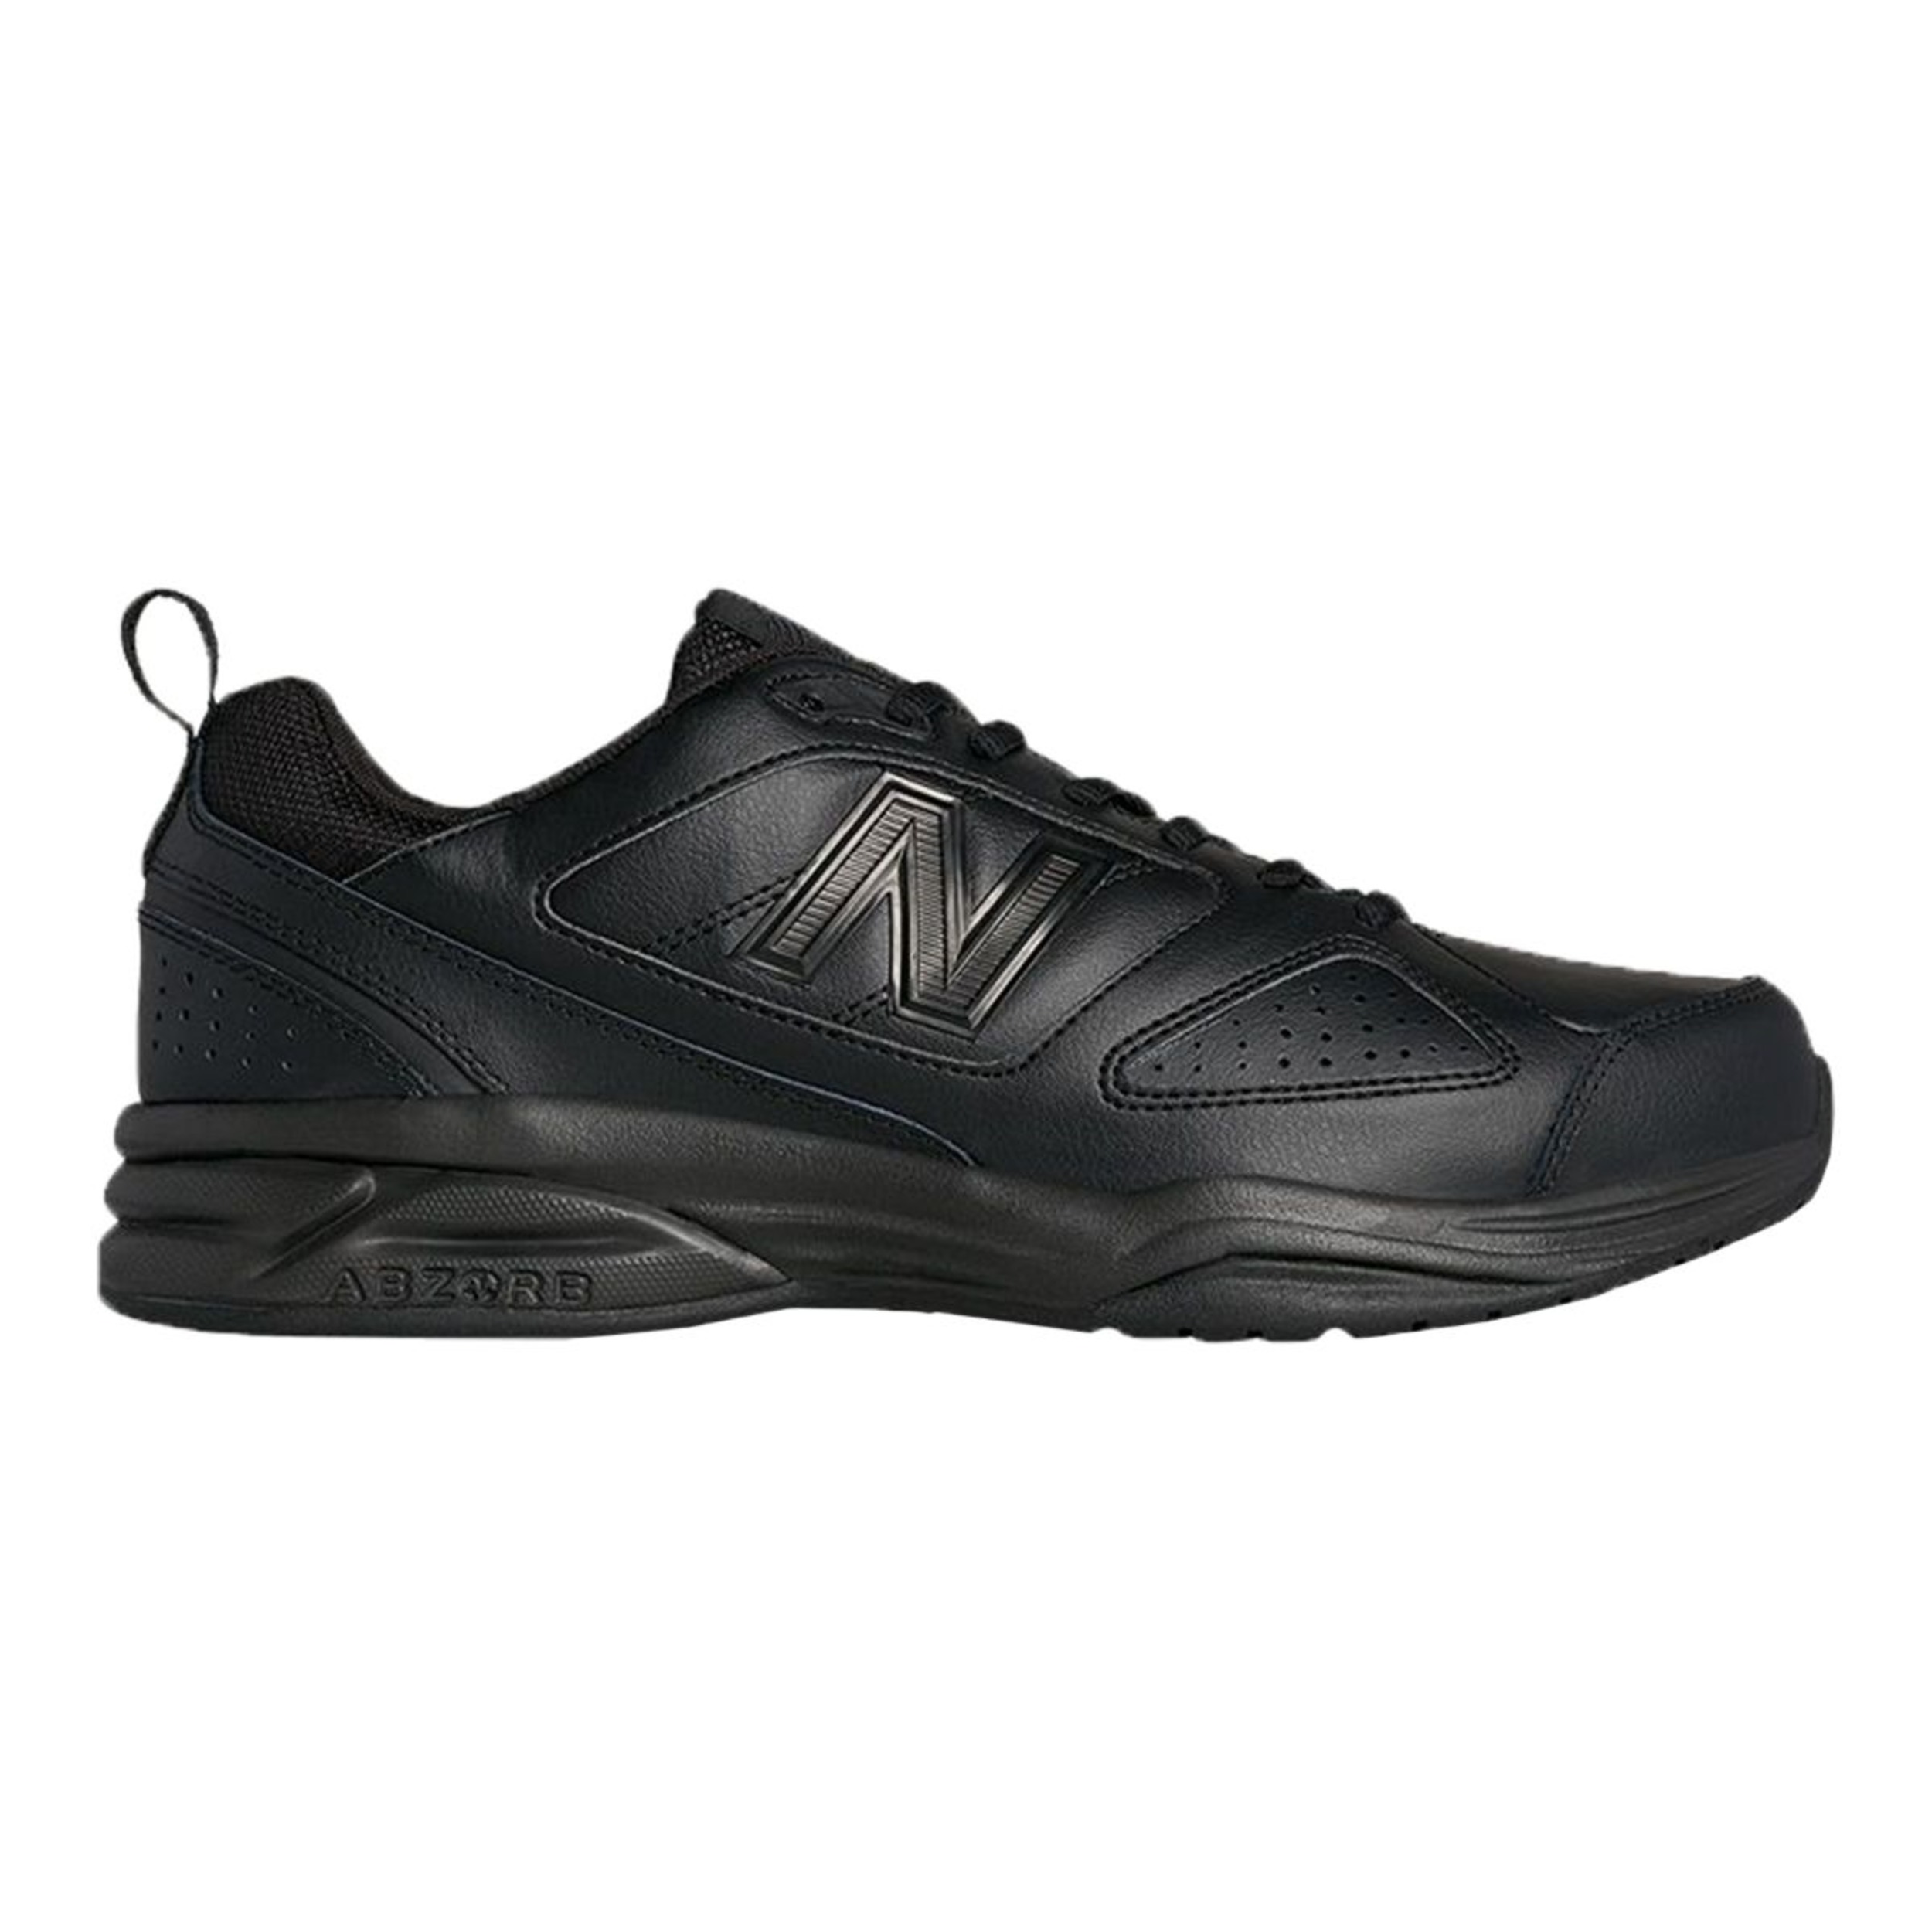 New Balance Men's MX623v3 Training Shoes, 2E Wide Width, Running ...